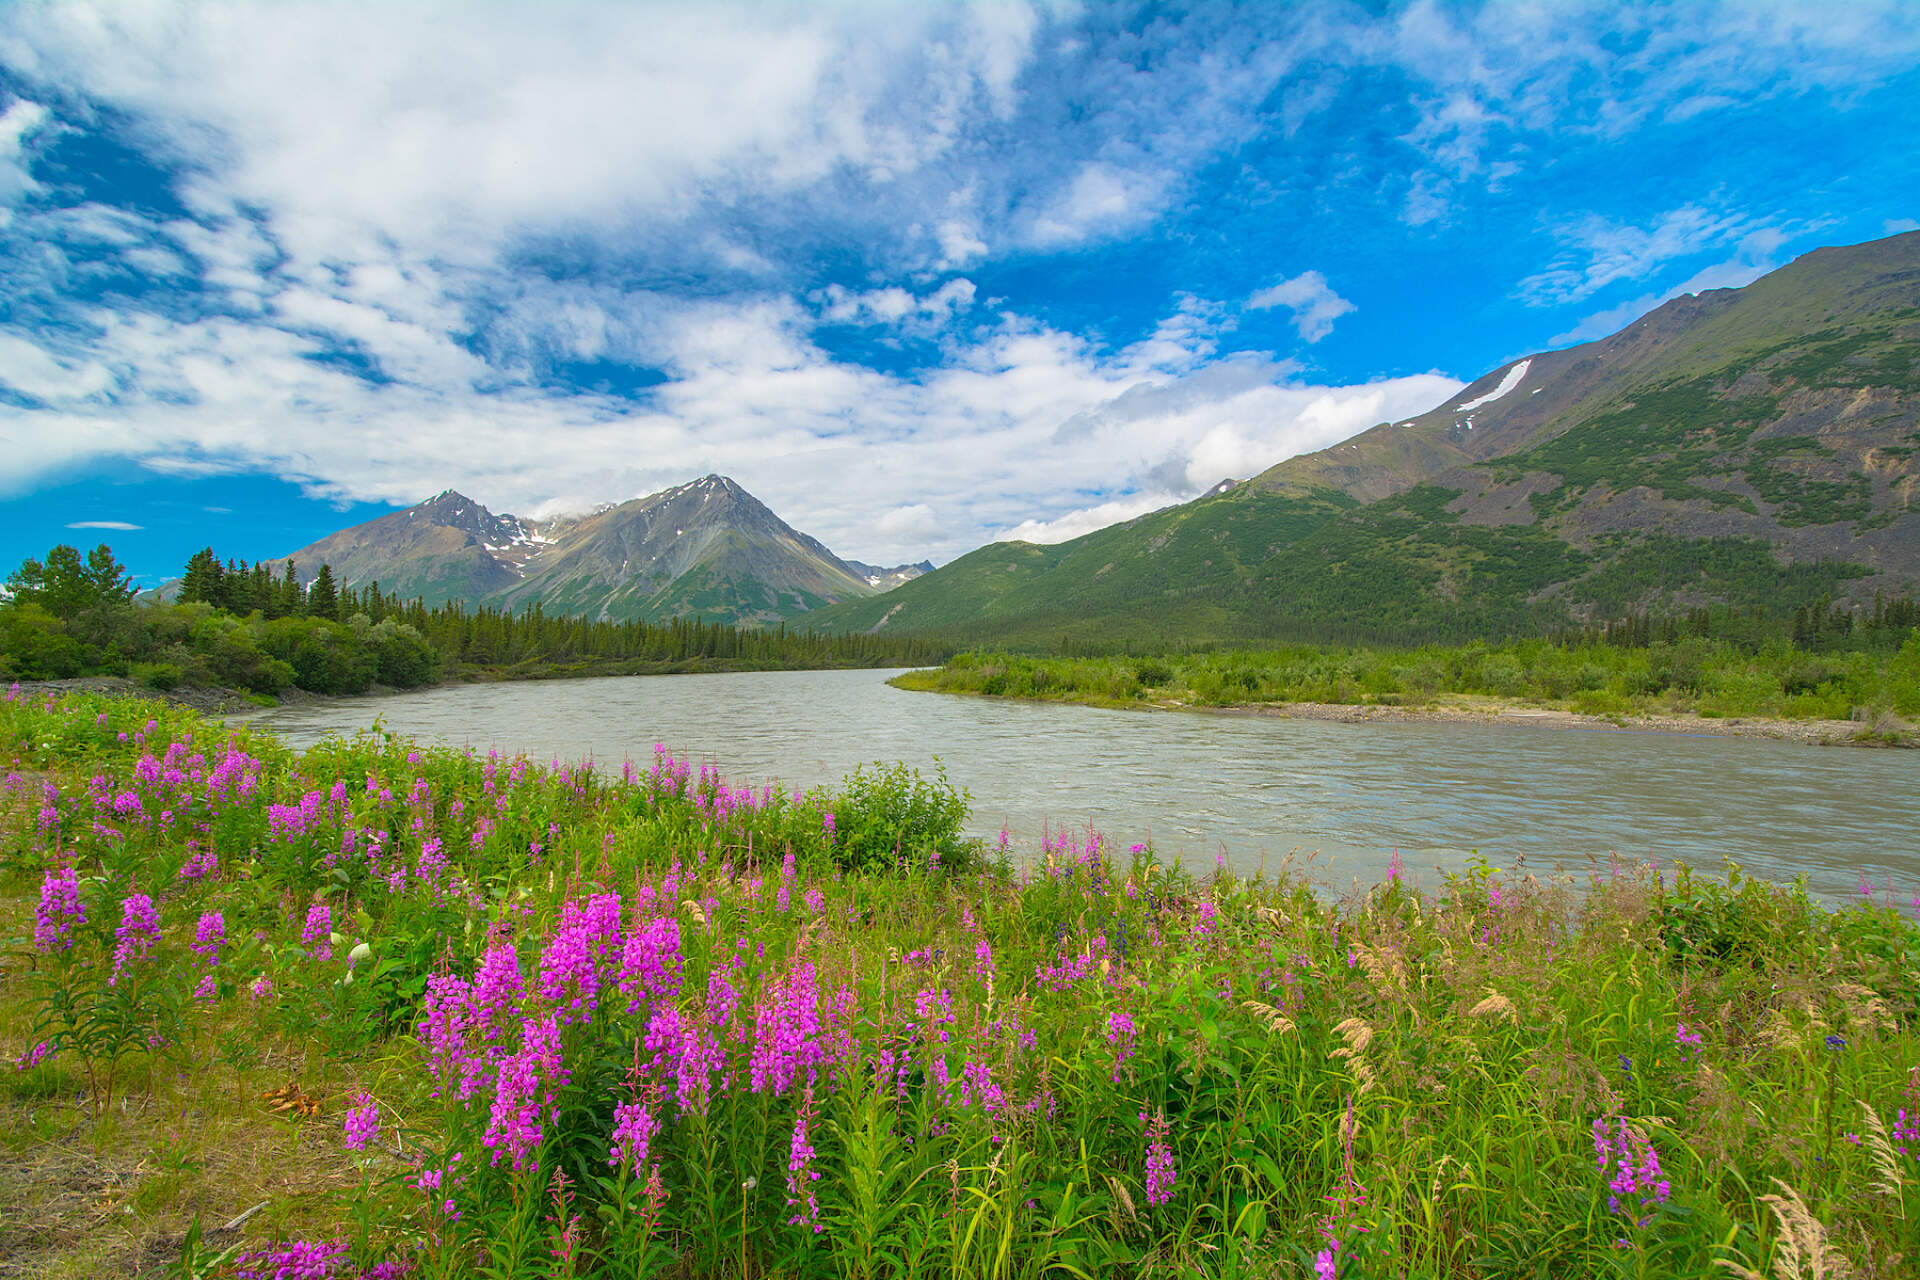 Wildflowers in front of a mountainous landscape in Alaska.